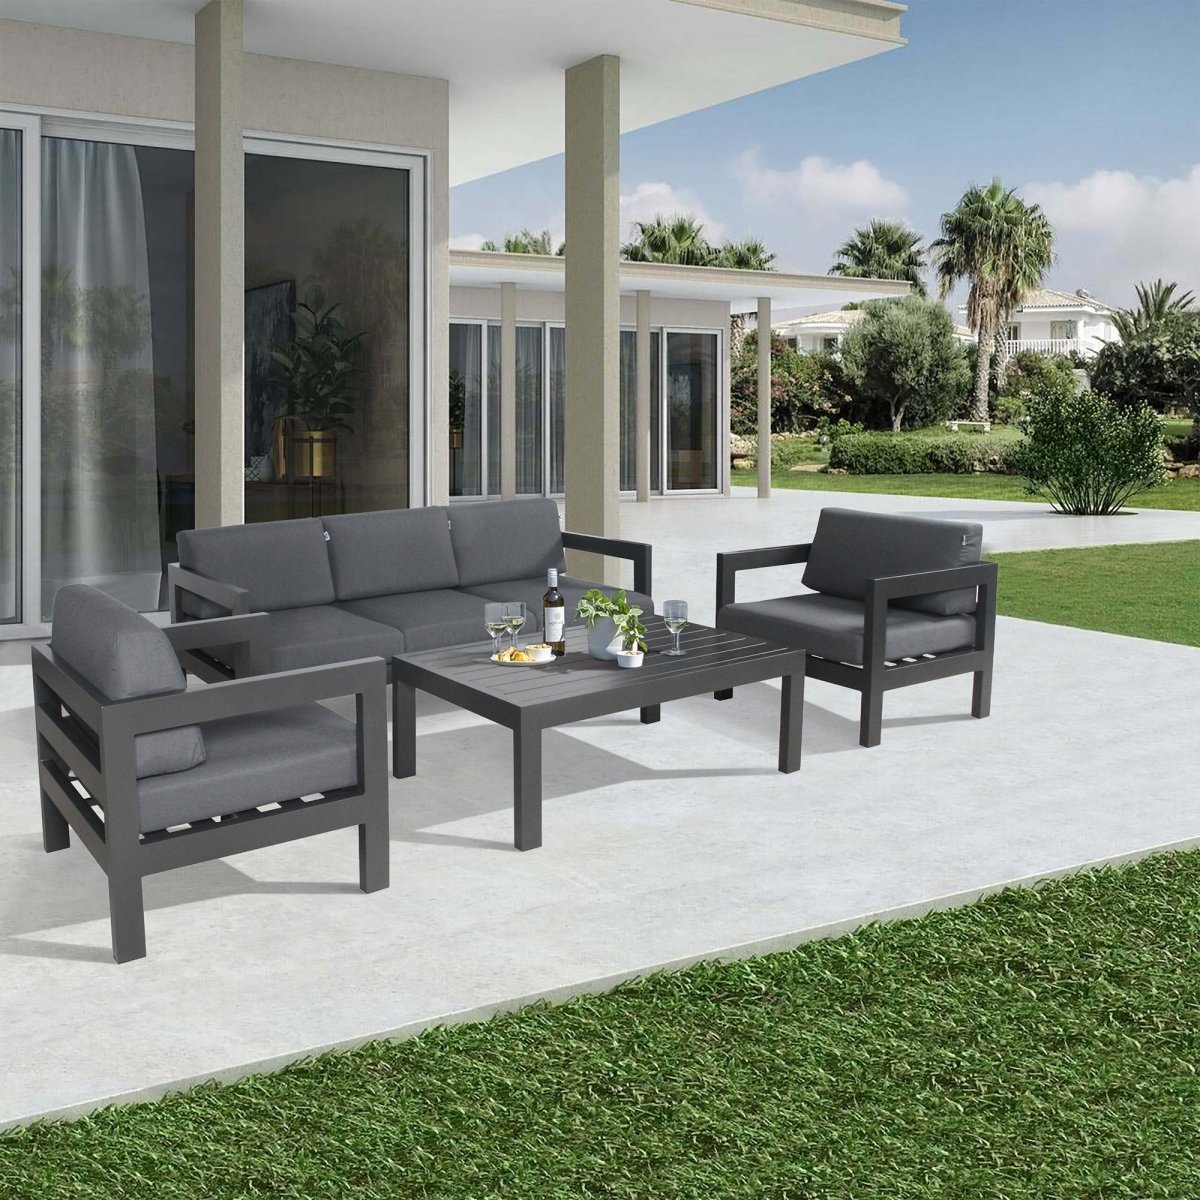 Outie Outdoor Sofa Lounge Chair Aluminium Frame Charcoal - Outdoorium